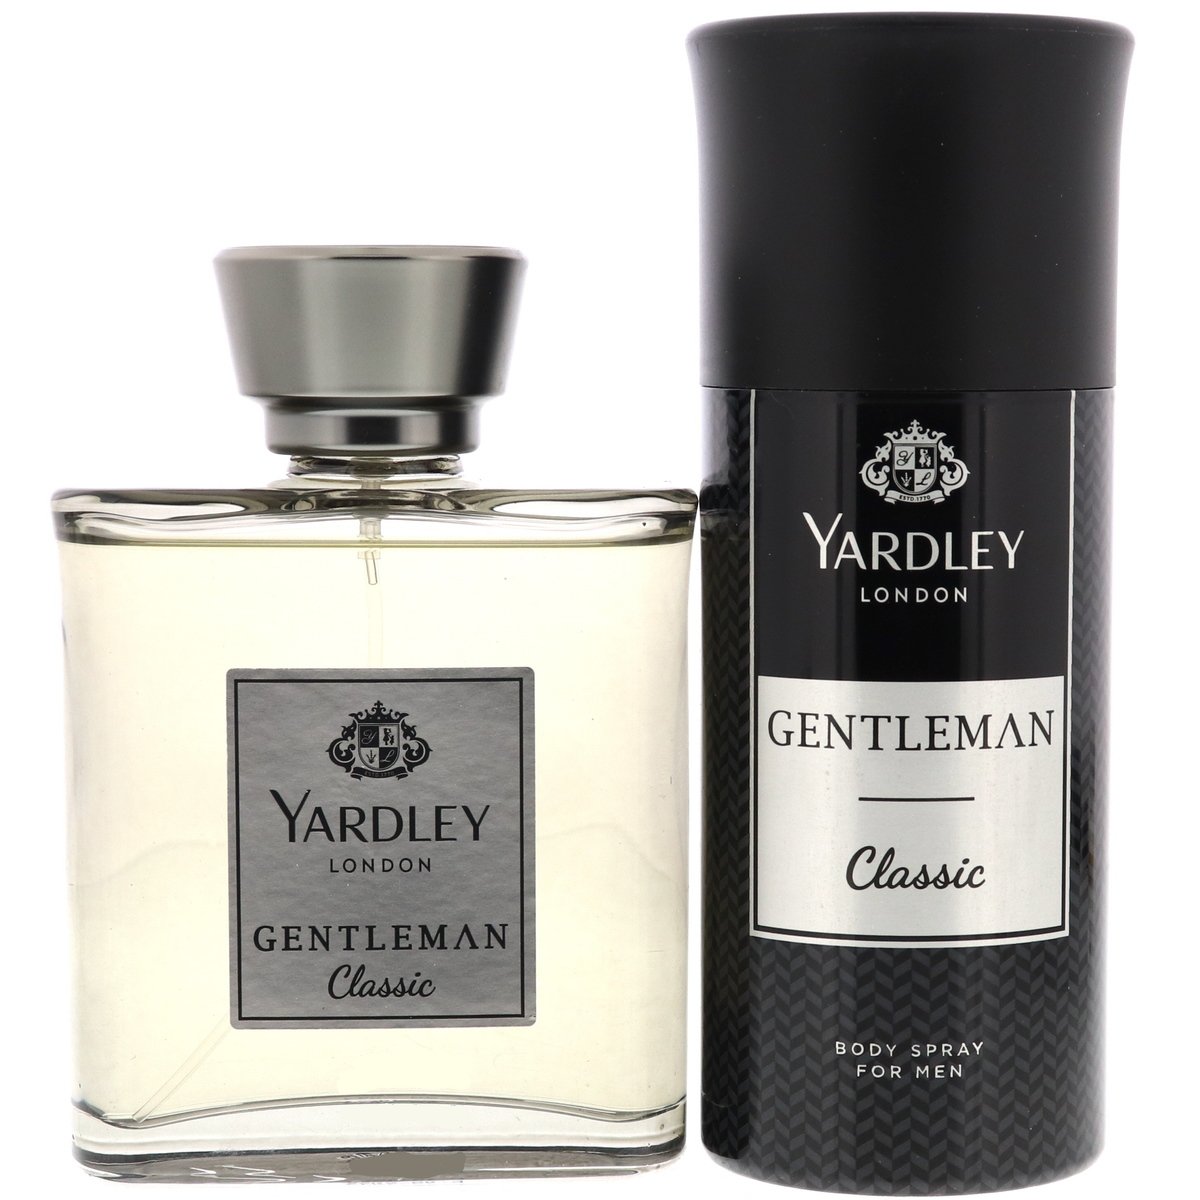 Yardley EDT Gentleman Classic 100 ml + Deodorant Body Spray For Men 150 ml